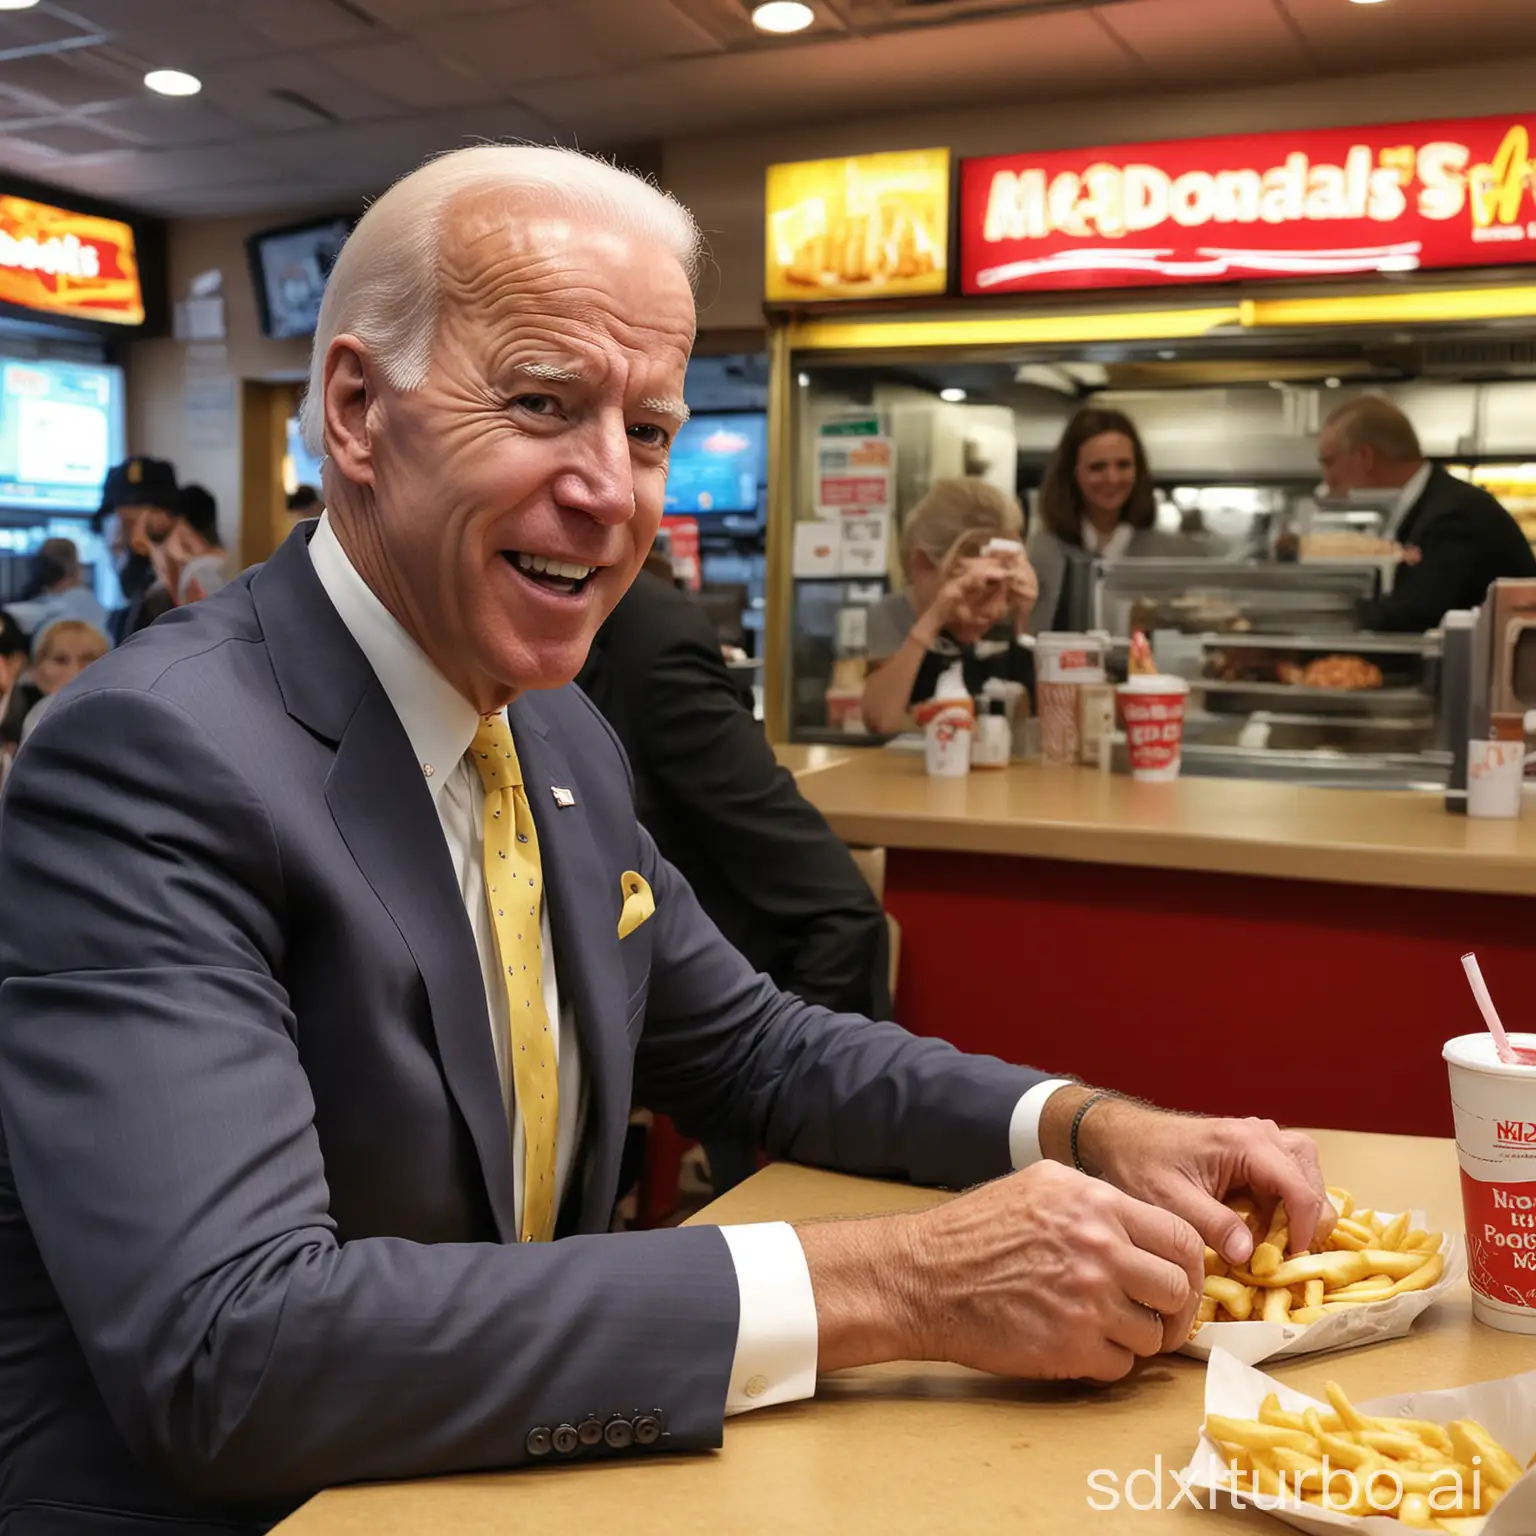 Joe-Biden-Enjoying-a-Meal-at-McDonalds